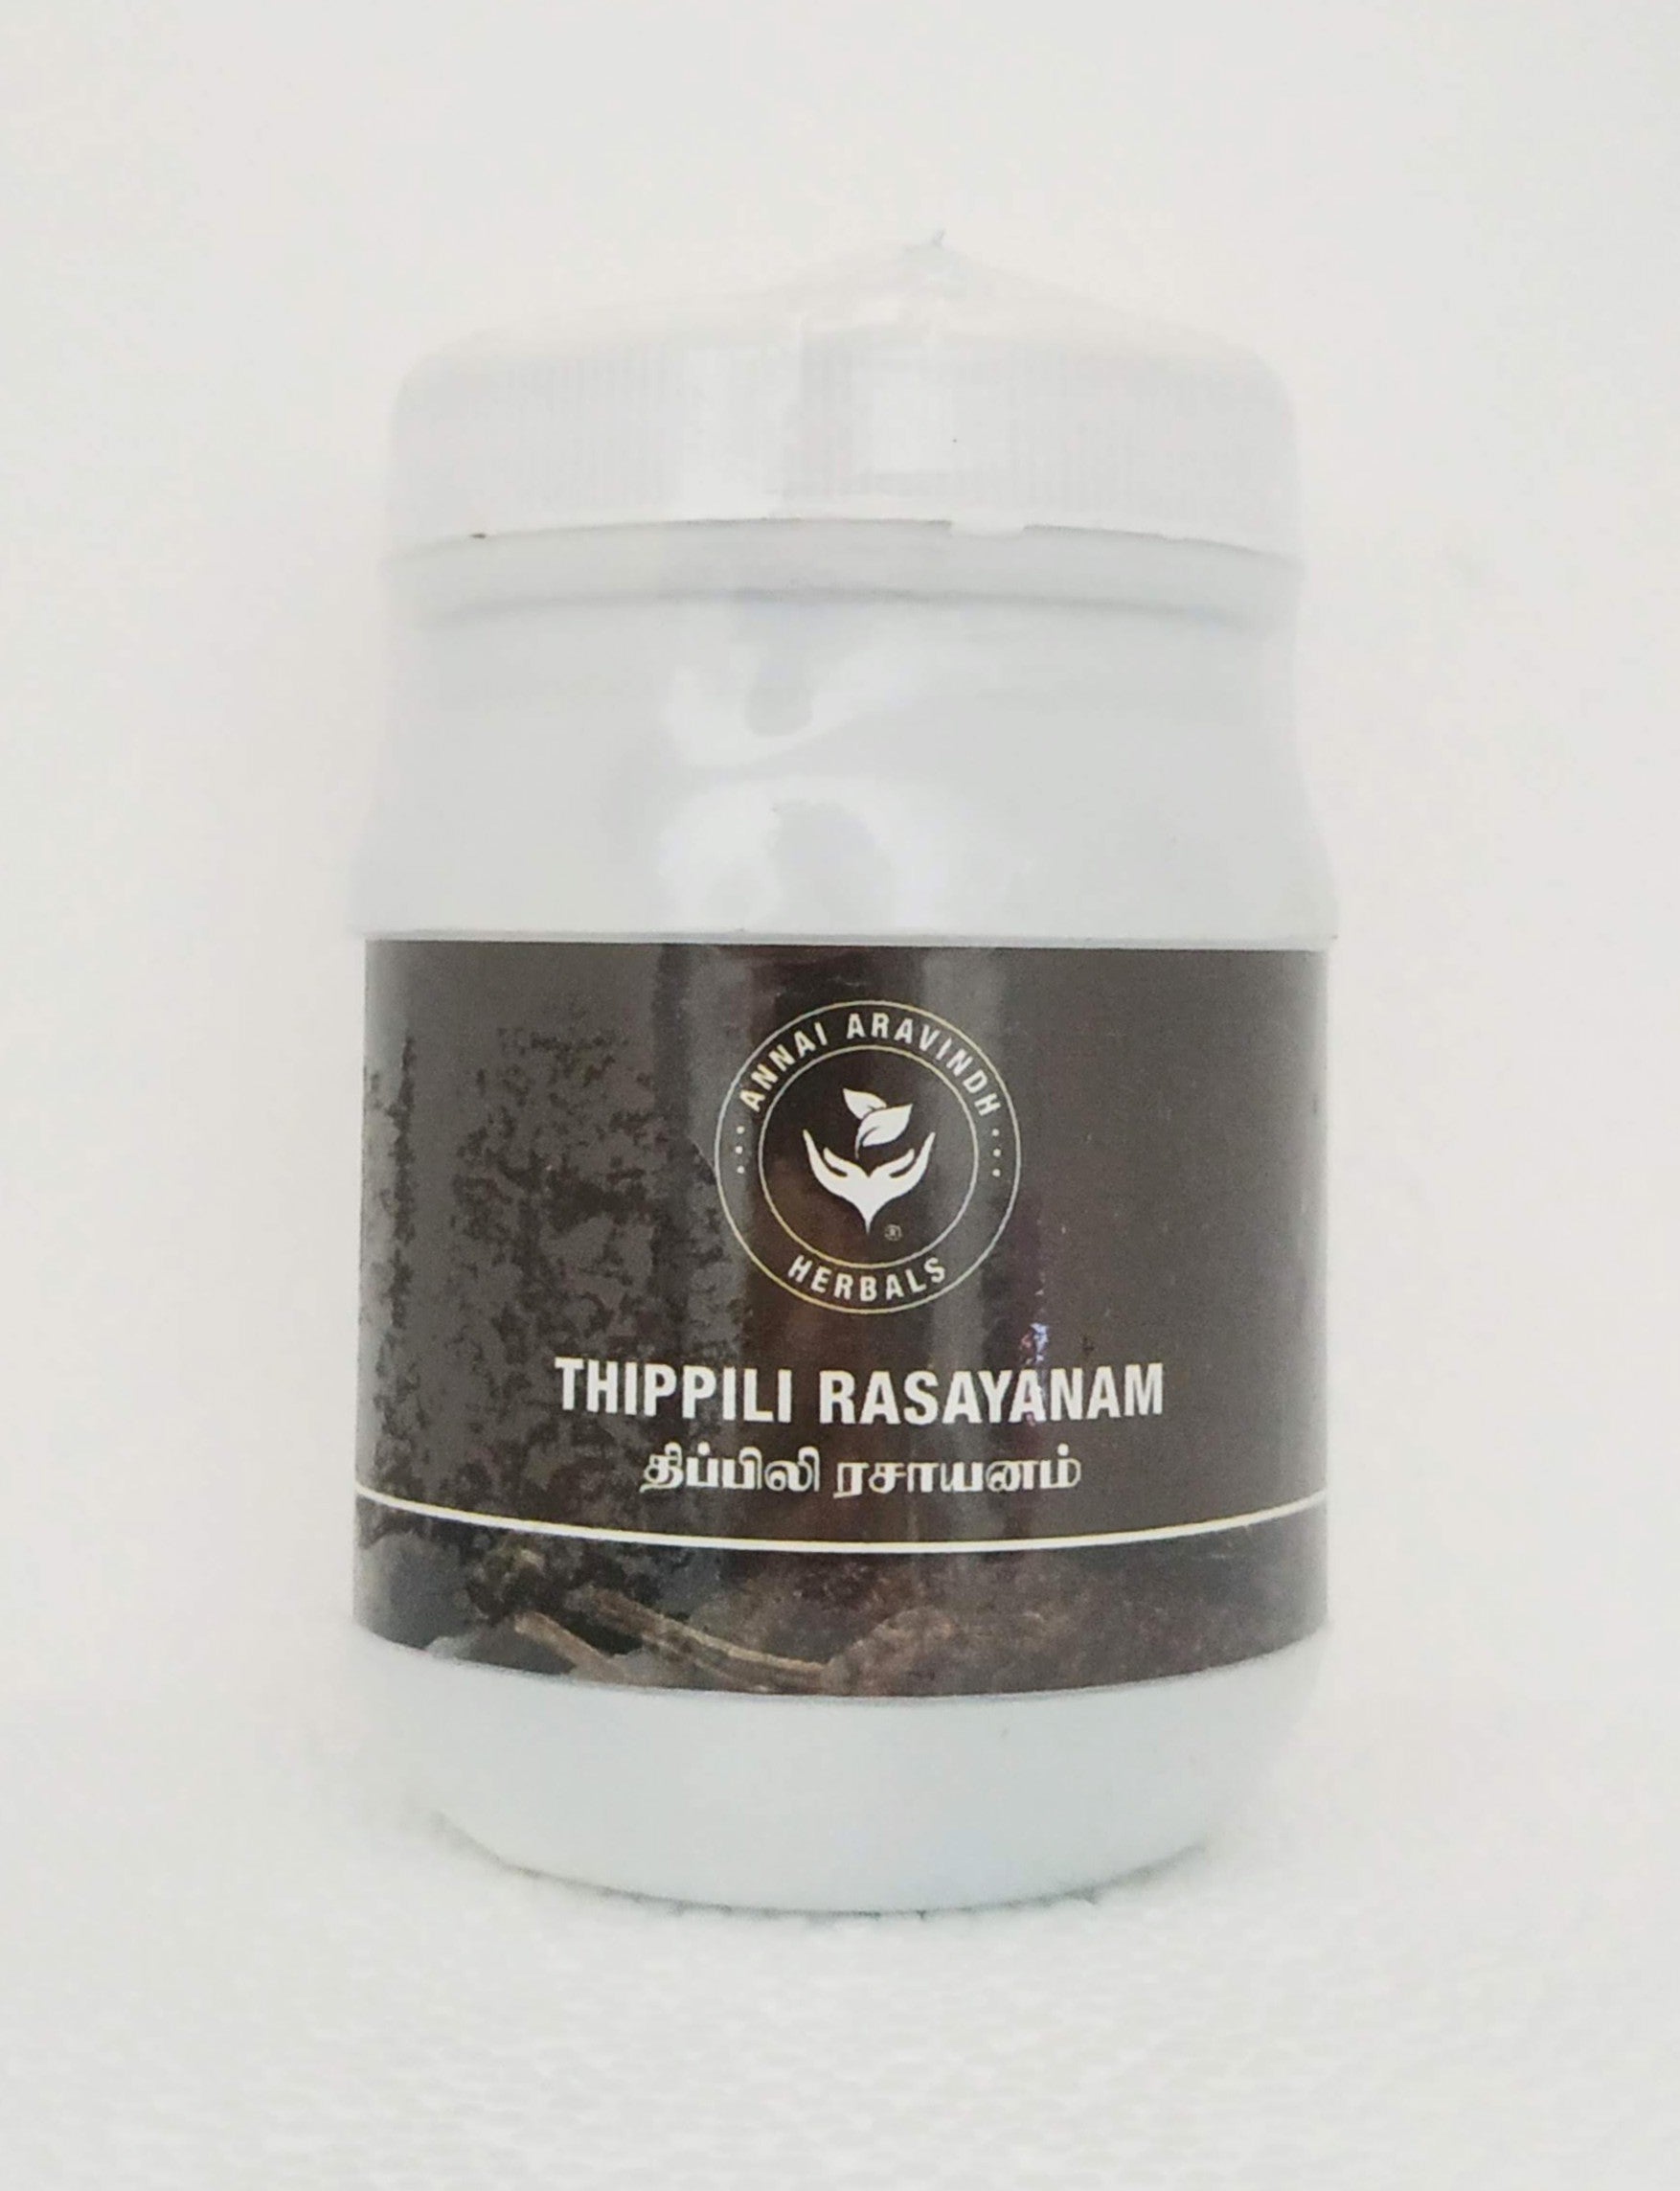 Shop Thippili rasayanam 250gm at price 195.00 from Annai Aravindh Online - Ayush Care